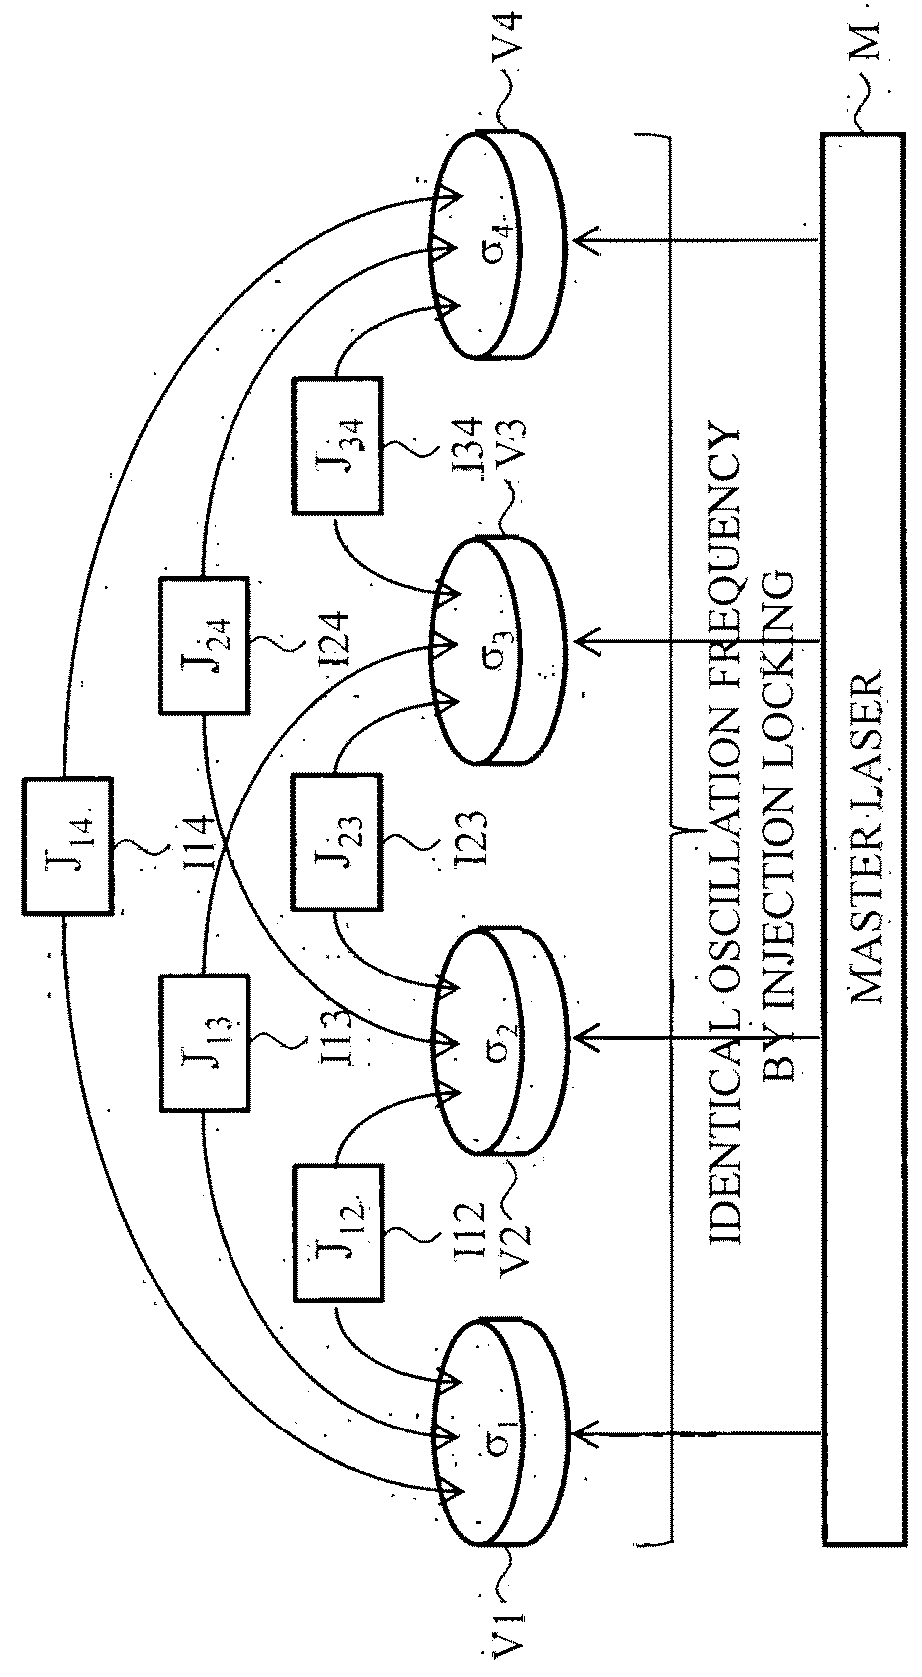 Quantum computing device for ising model, quantum parallel computing device for ising model, and quantum computing method for ising model